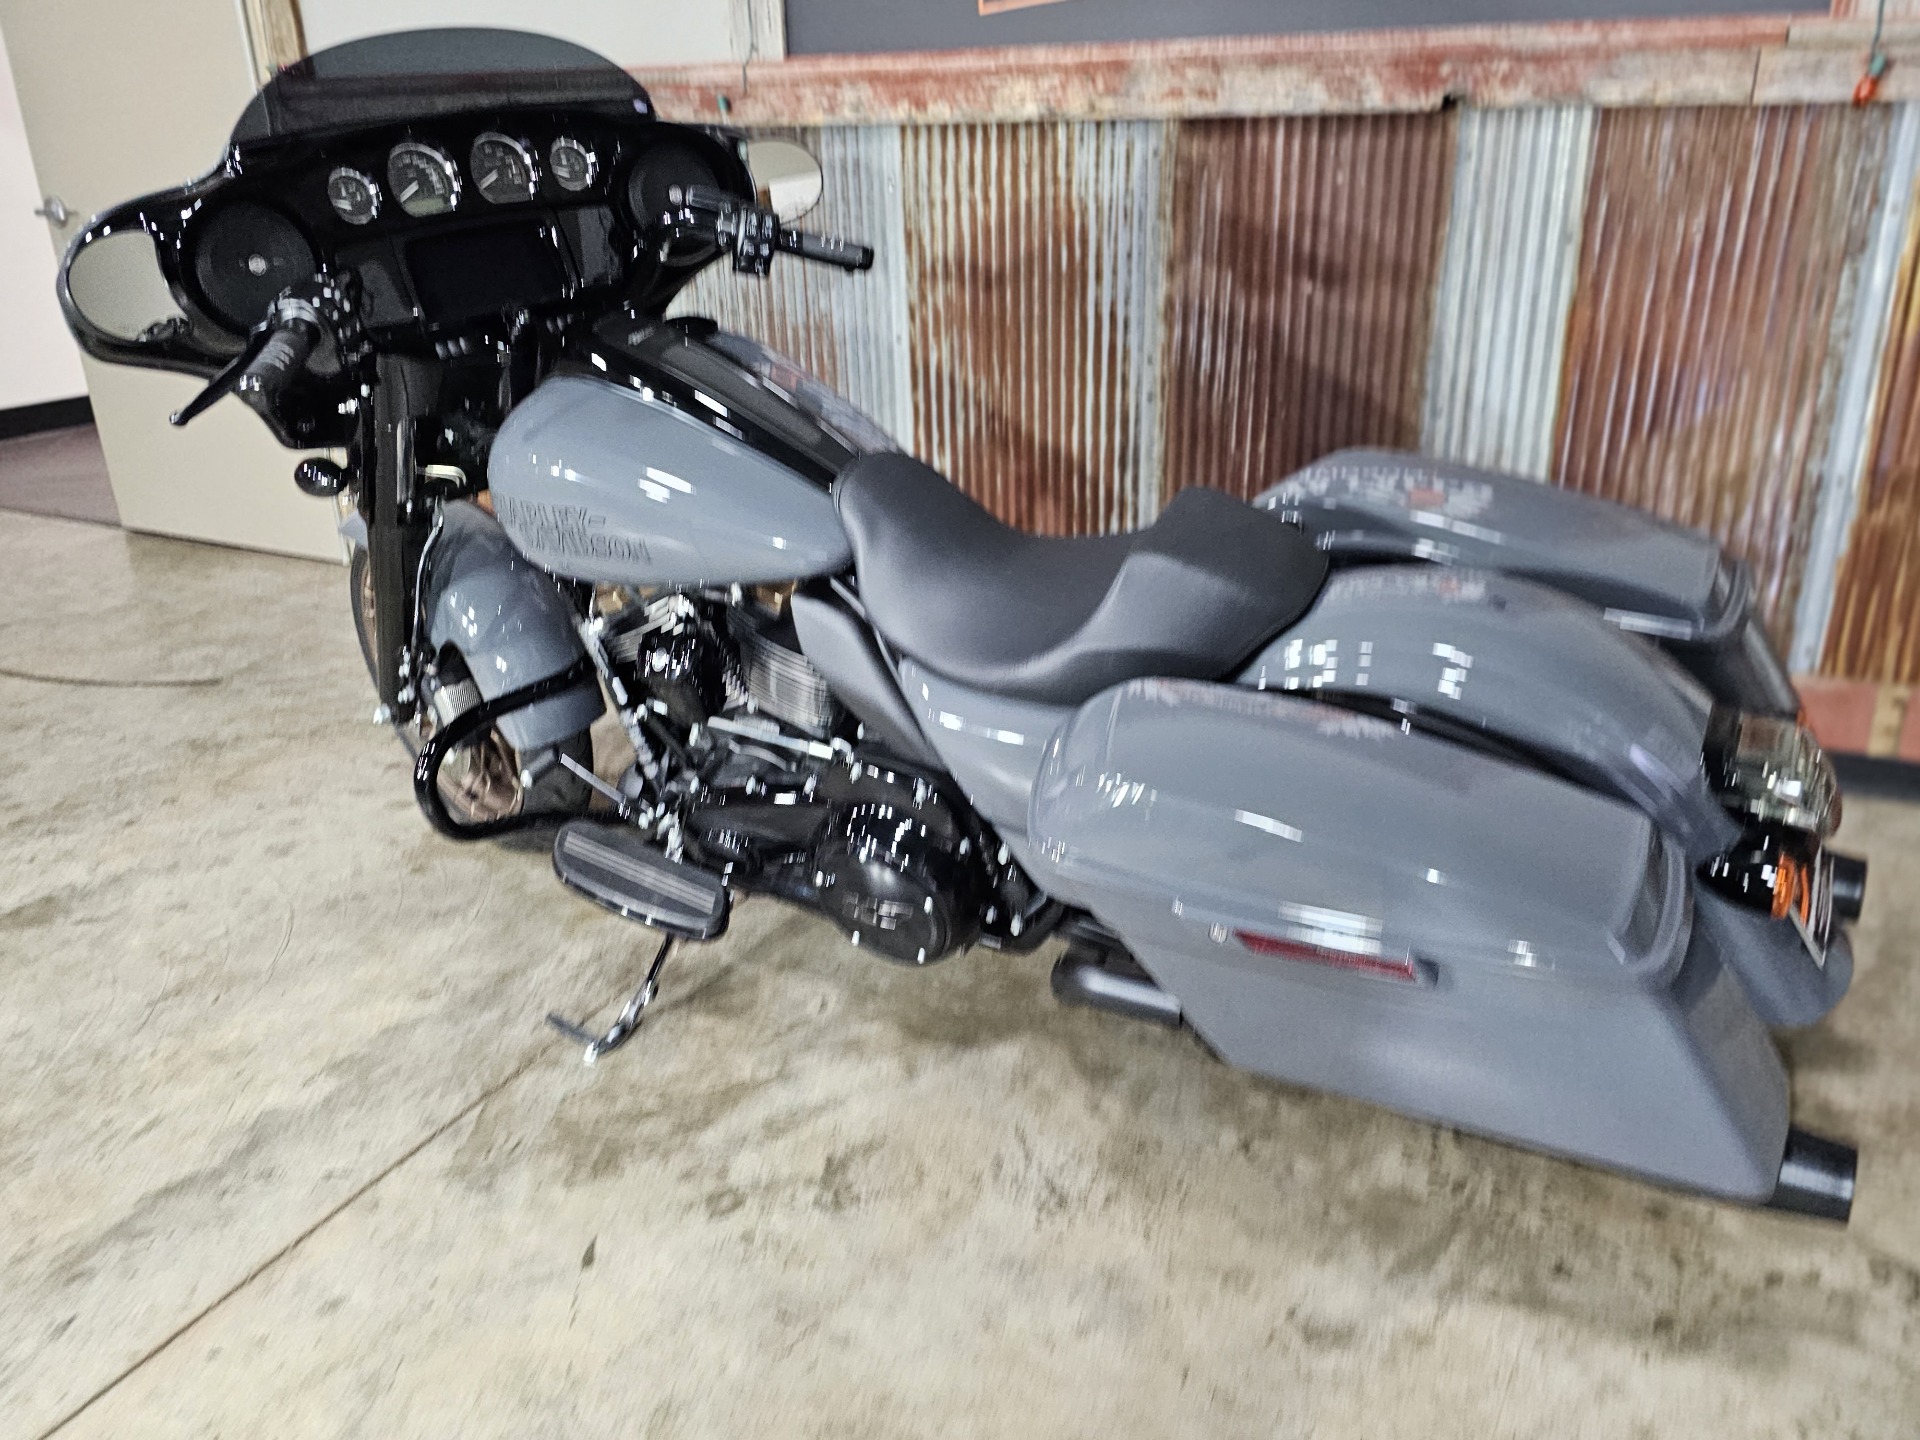 2022 Harley-Davidson Street Glide® ST in Chippewa Falls, Wisconsin - Photo 12